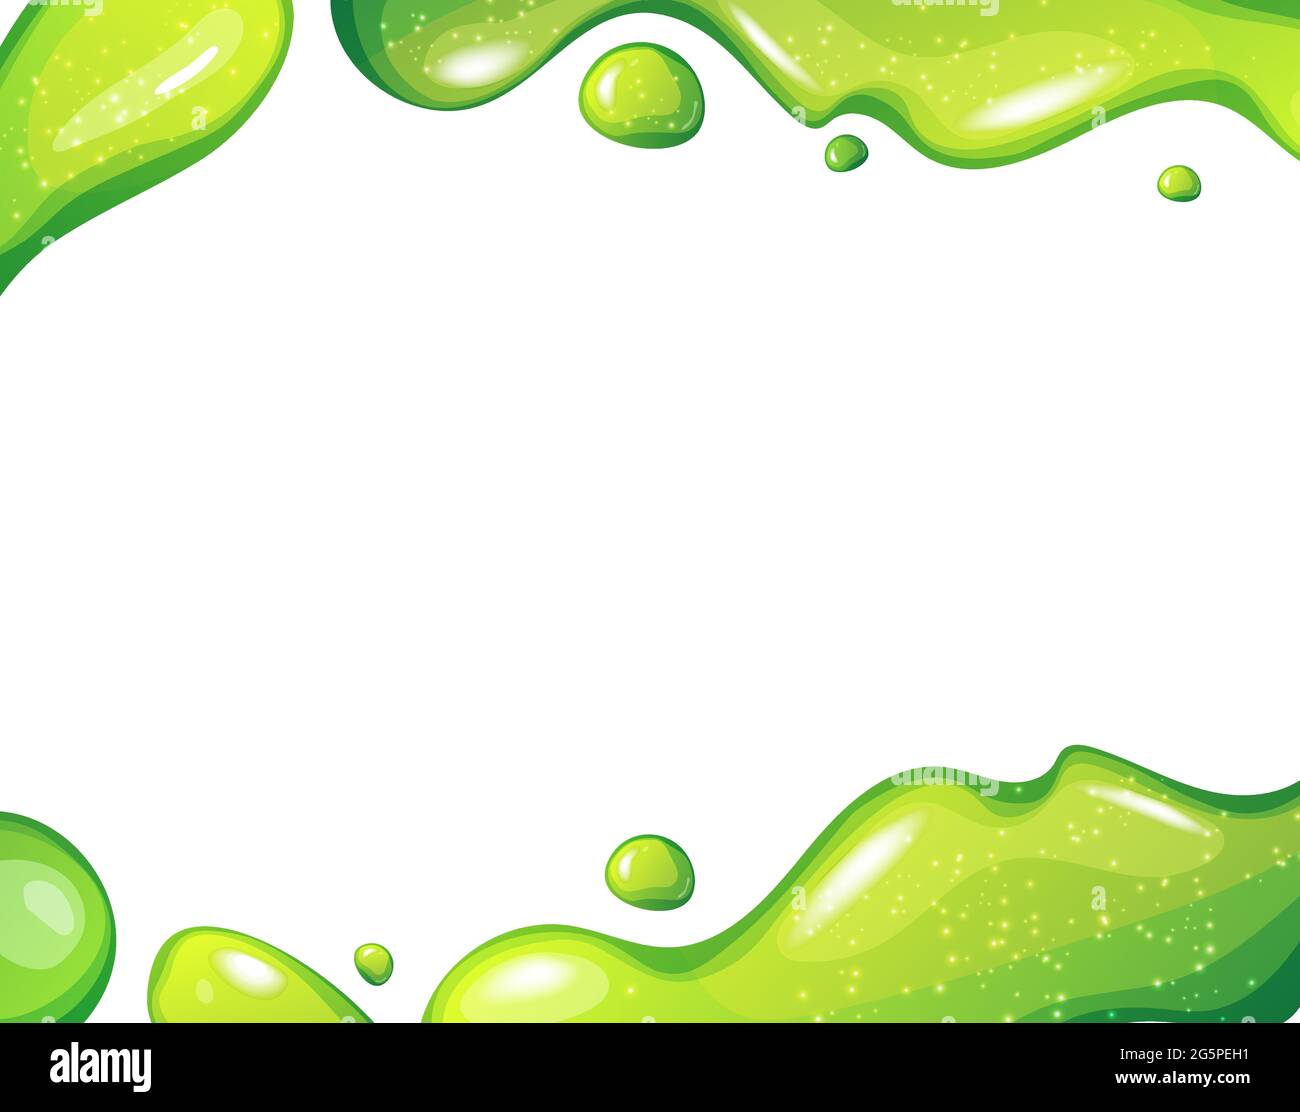 Green cartoon slime drops background. Blob splashes for banners. Kids sensory toy. Vector illustration. Stock Vector